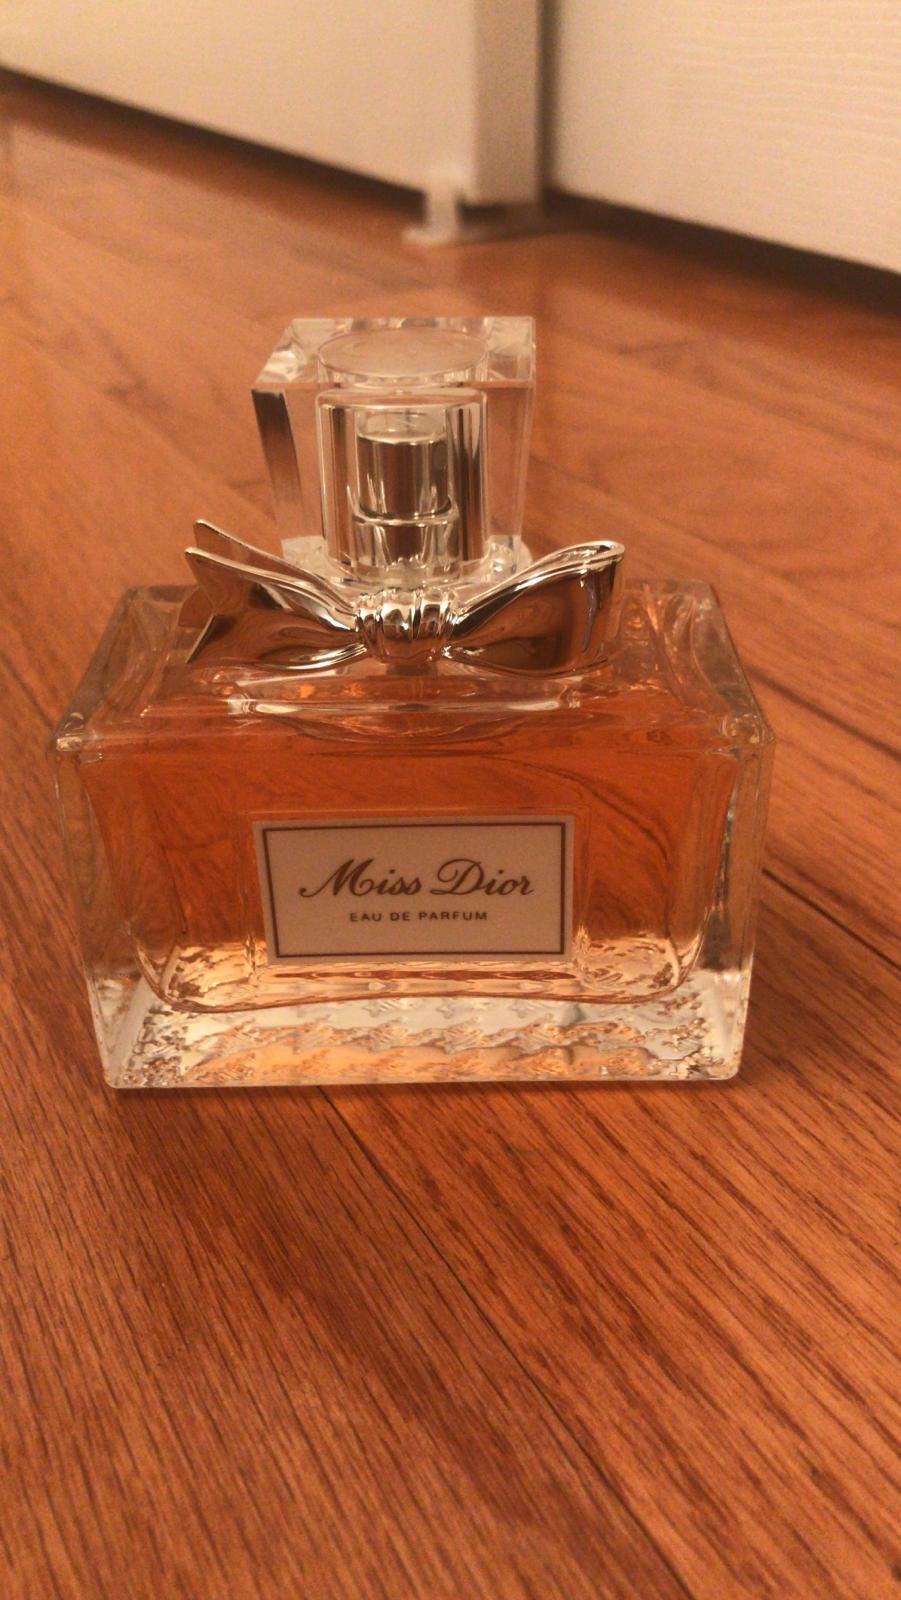 Dior perfume for women